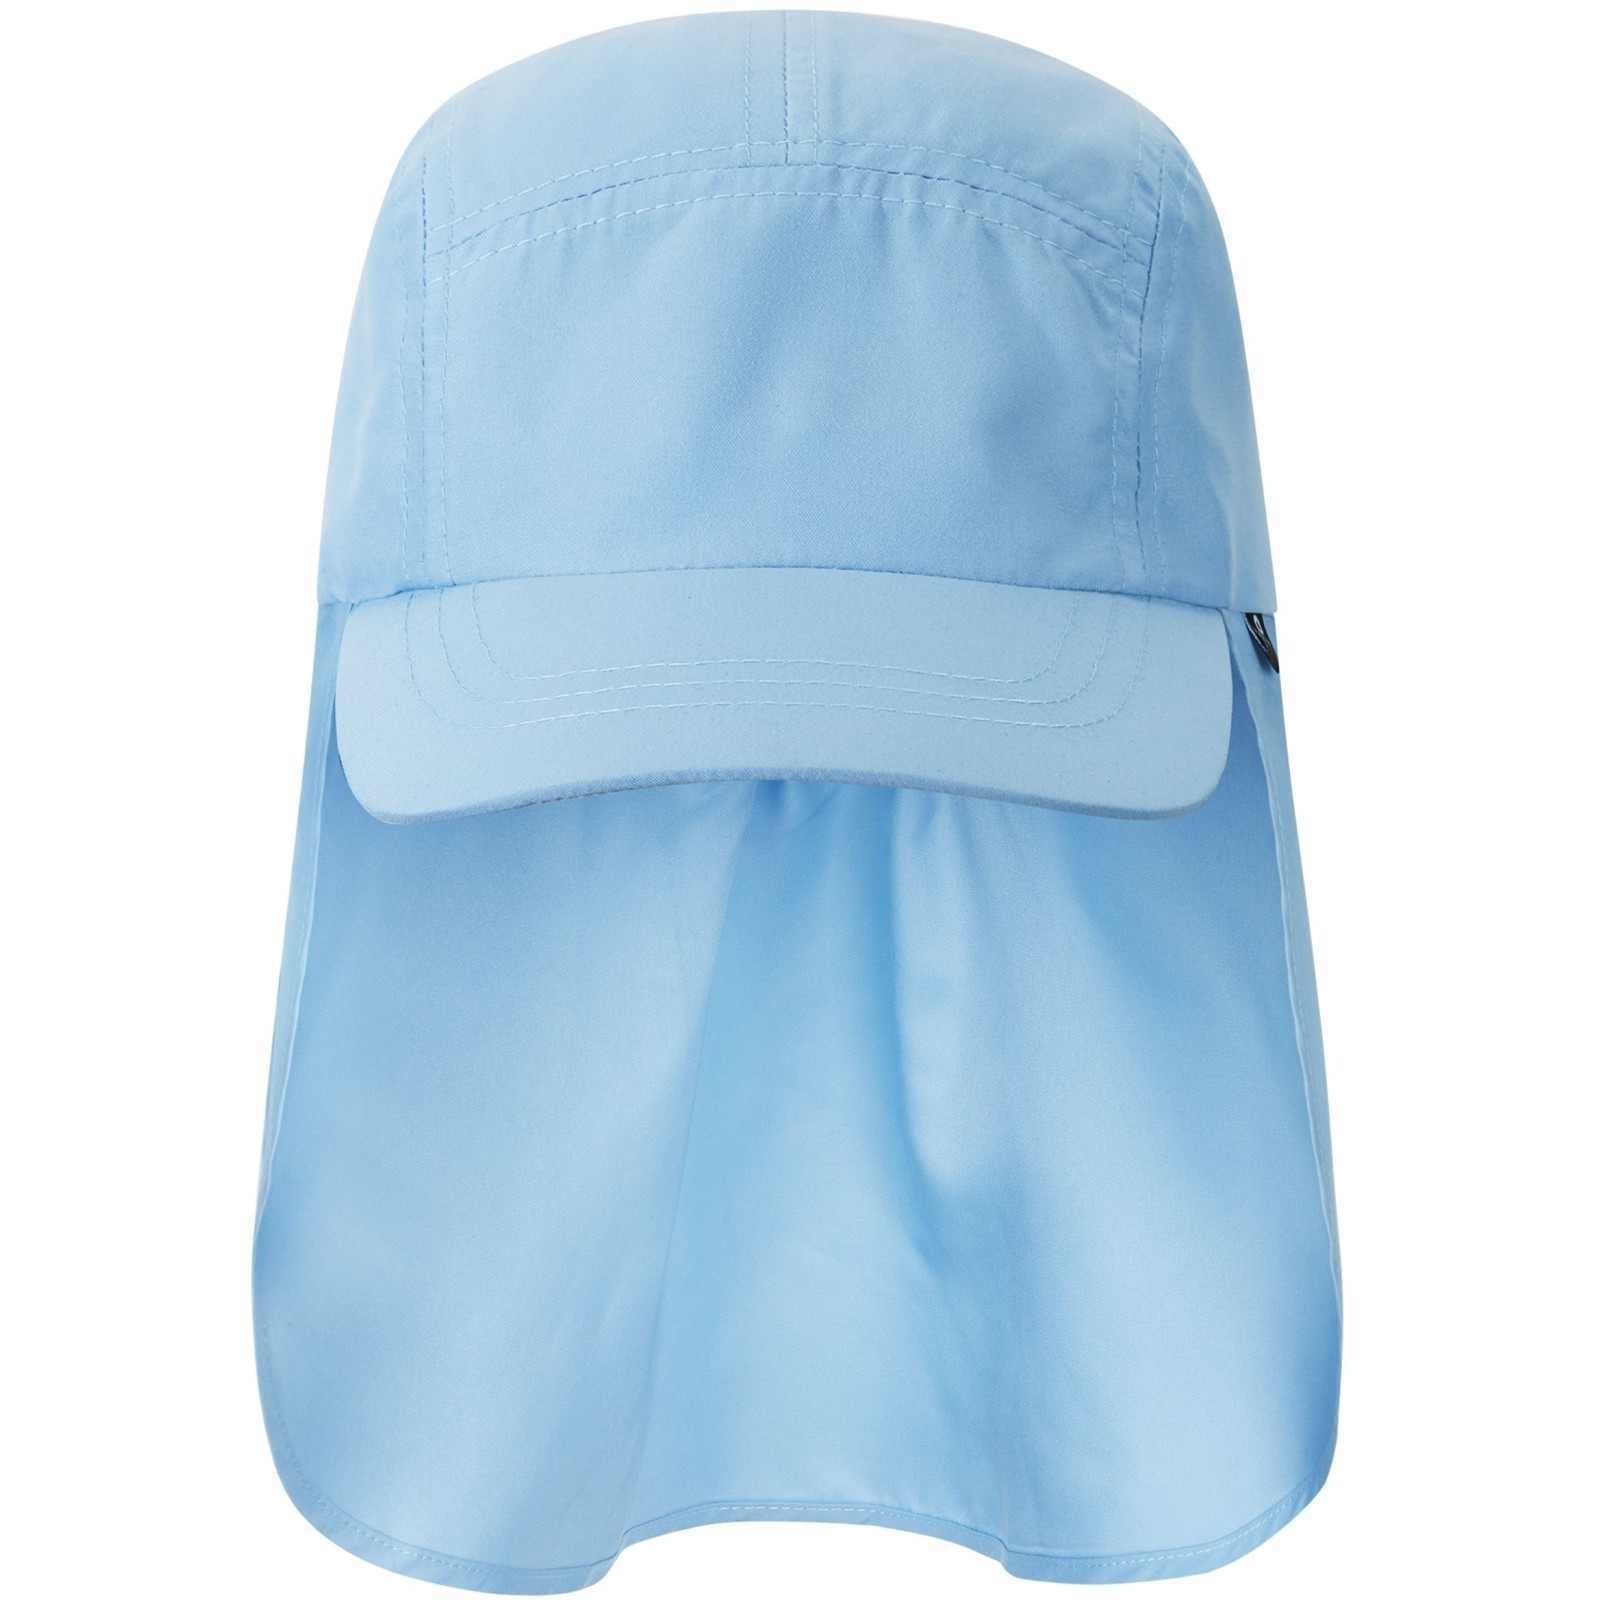 Dětský klobouk Reima Biitsi Obvod hlavy: 54 cm / Barva: modrá